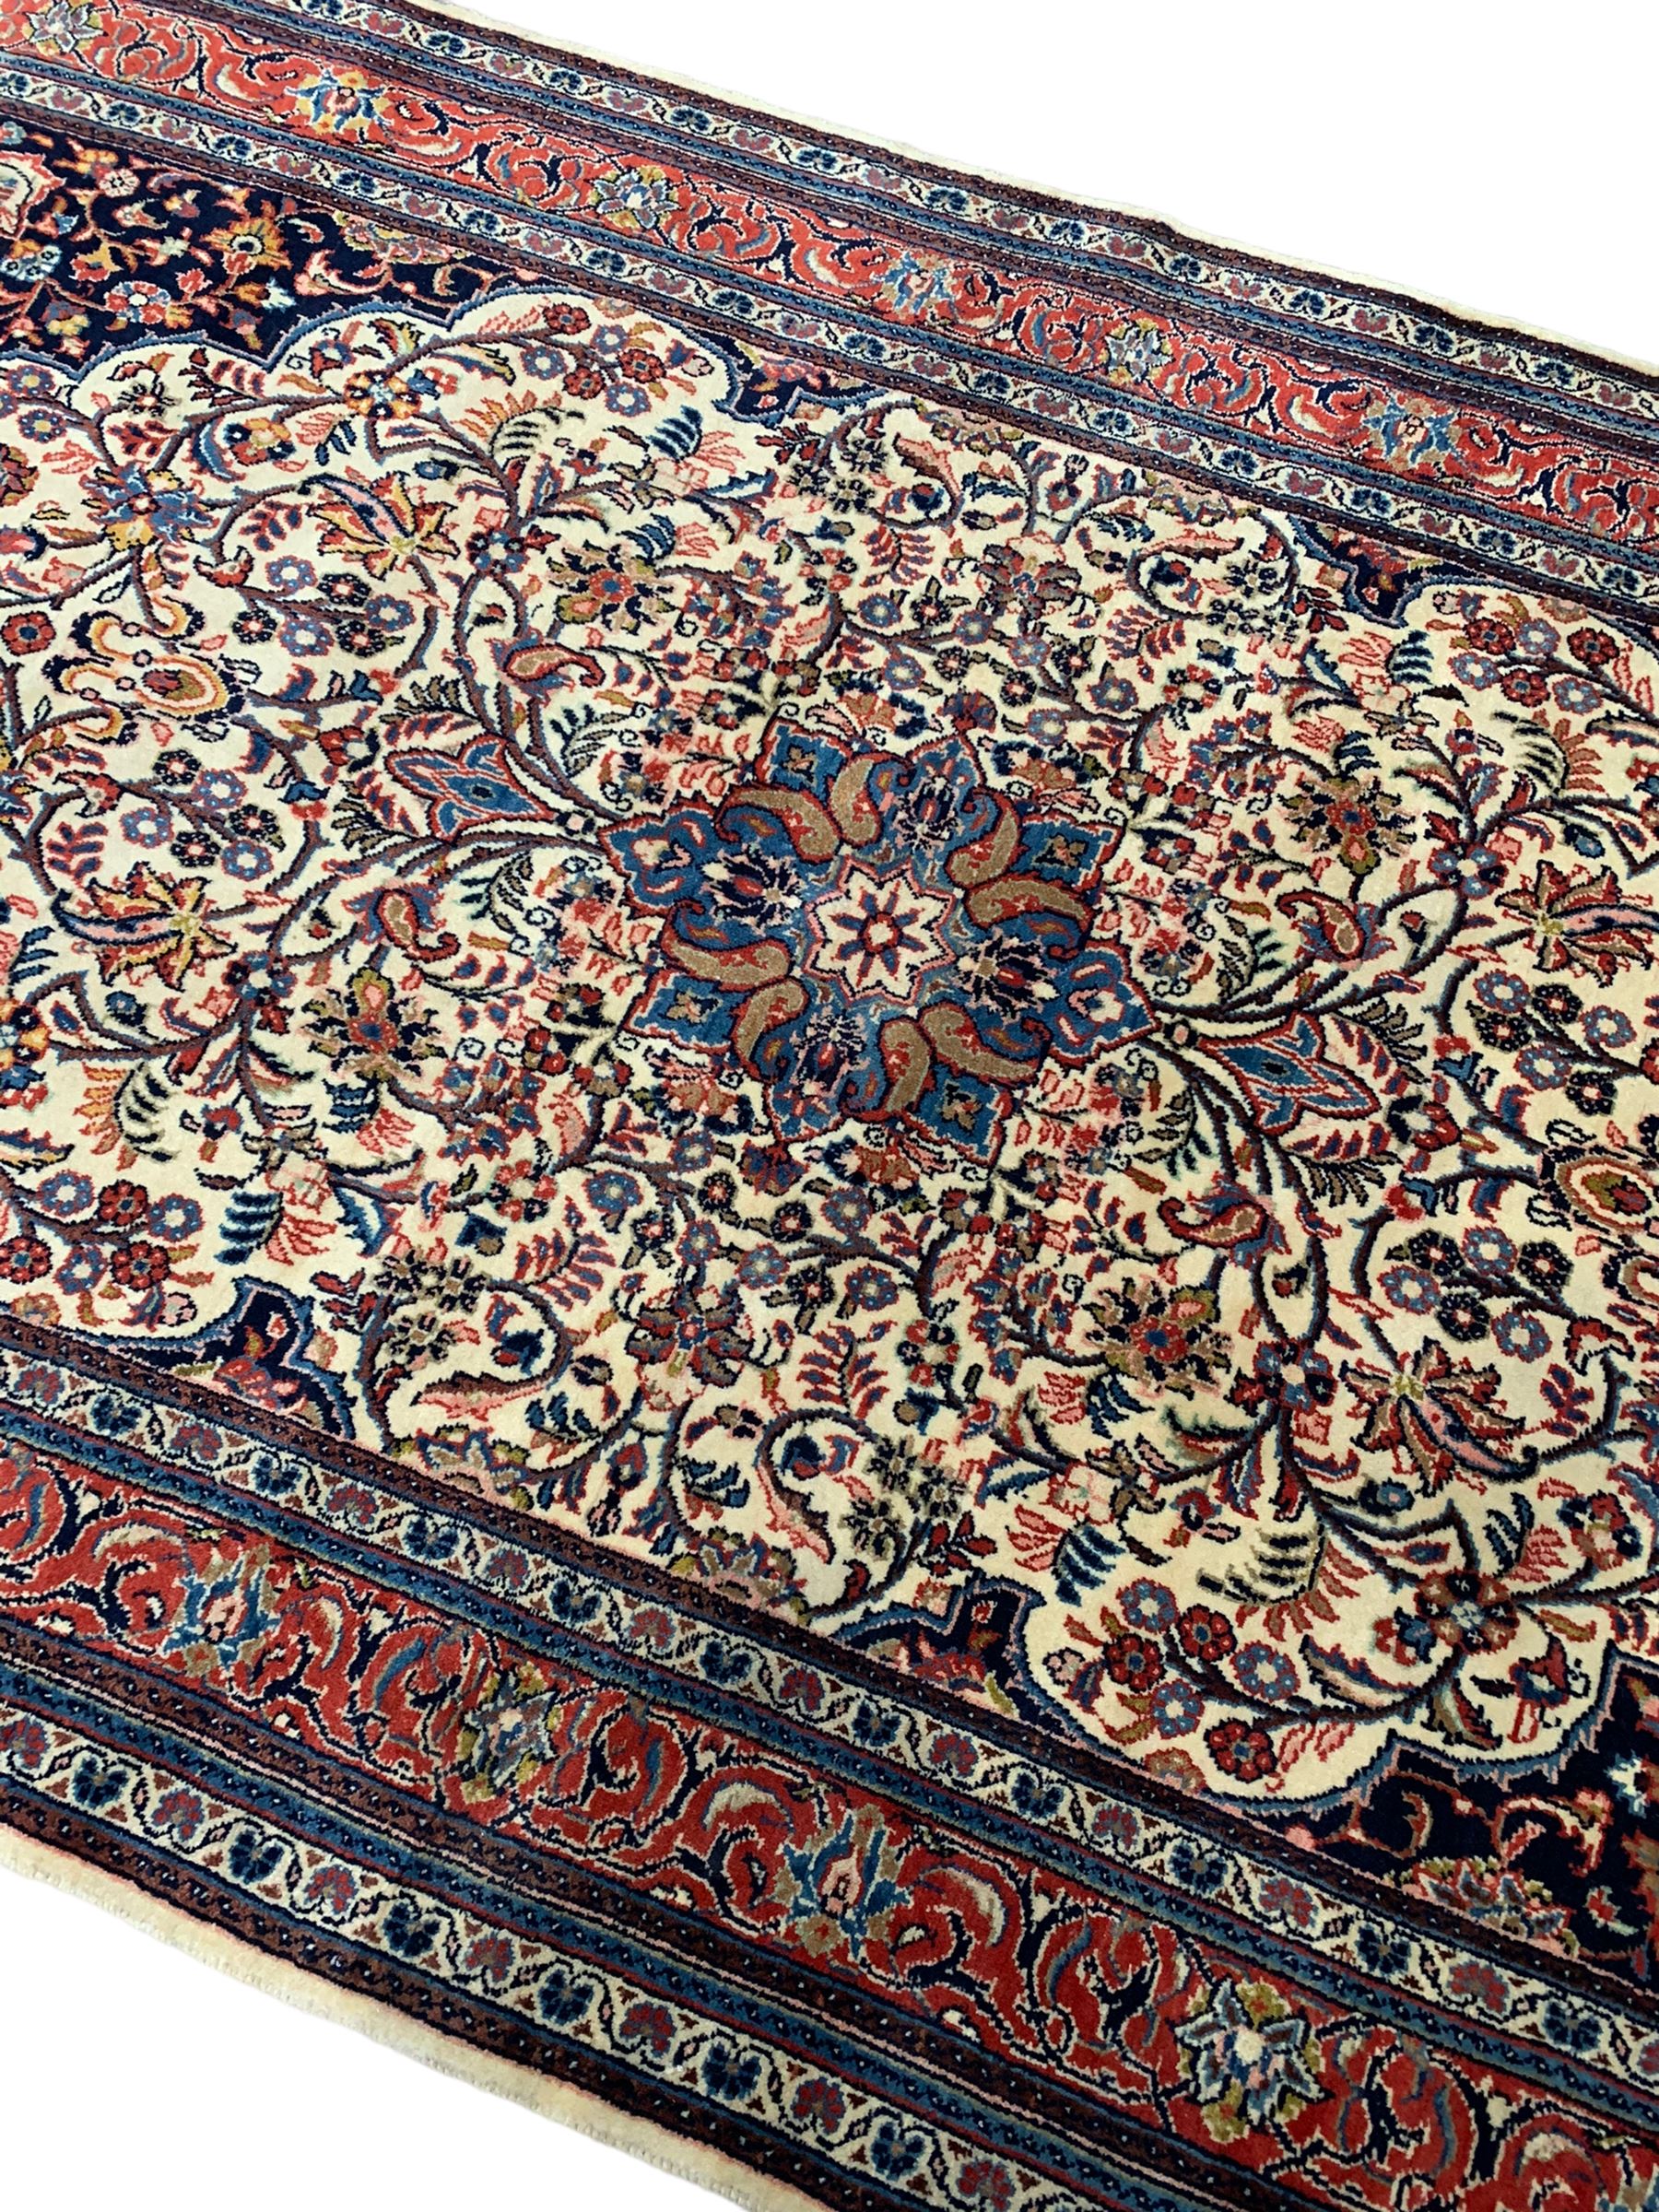 Persian Mahallat crimson ground rug - Image 8 of 8